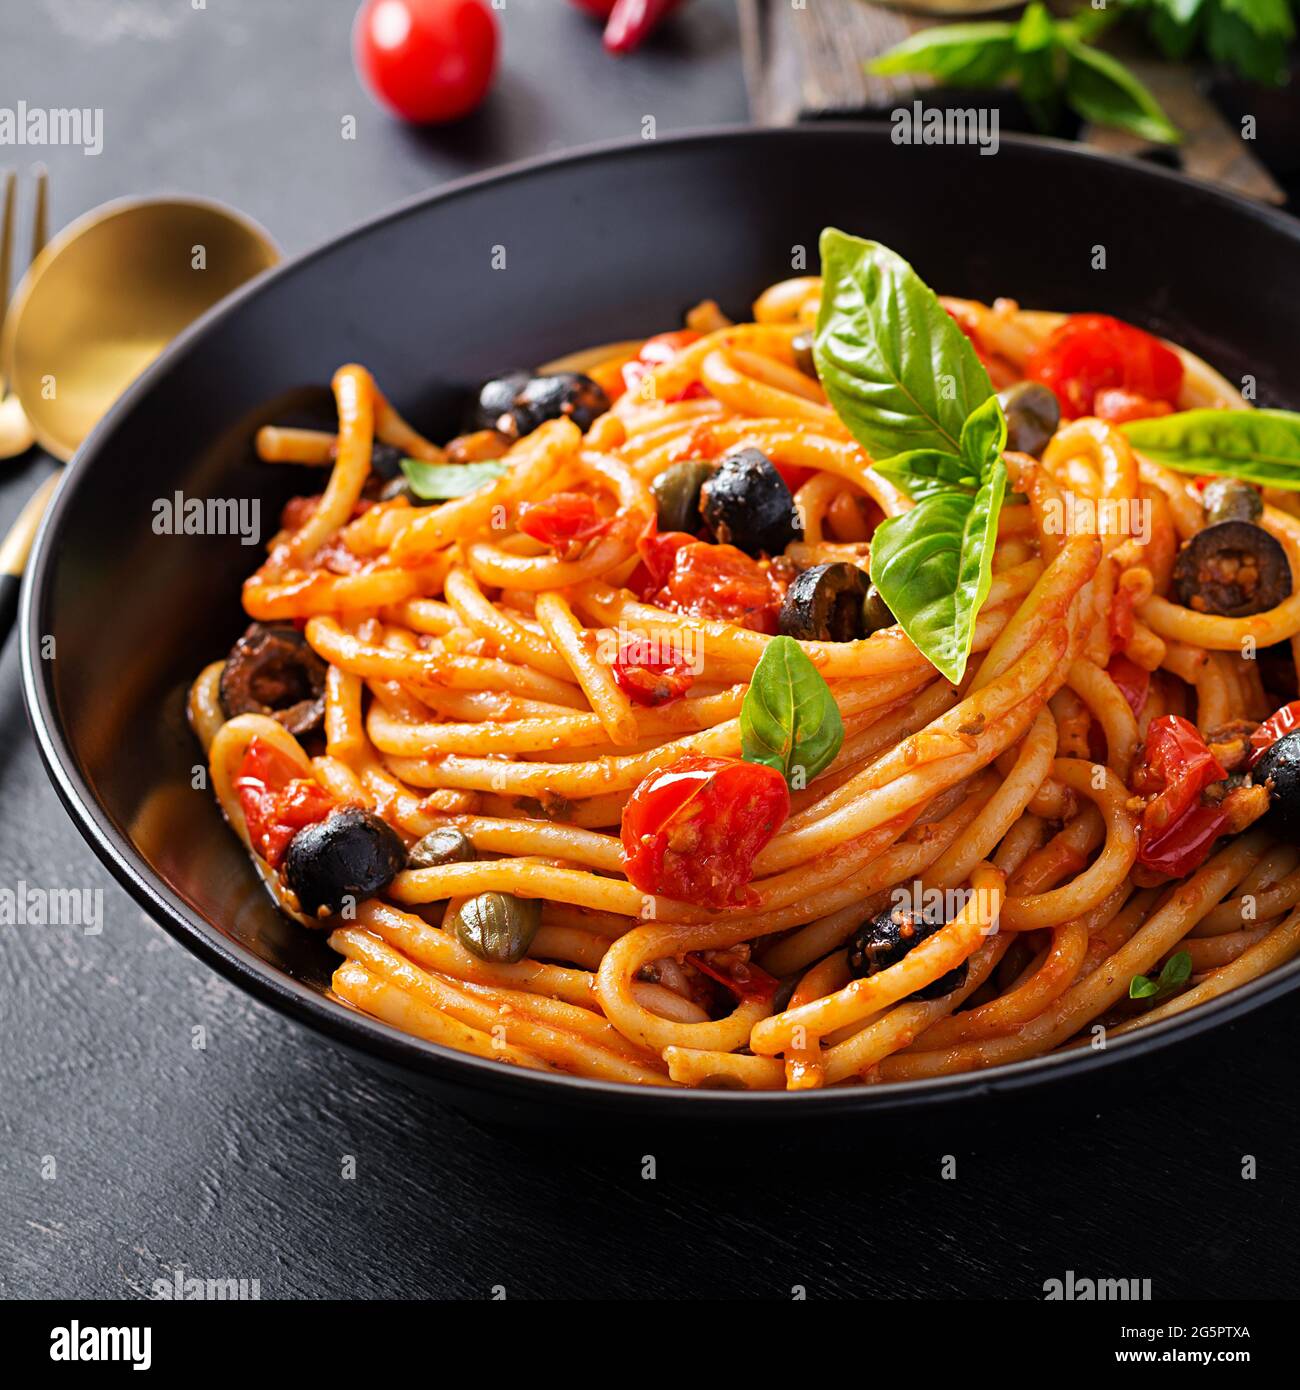 Spaghetti alla puttanesca - italian pasta dish with tomatoes, black olives, capers, anchovies and basil. Stock Photo